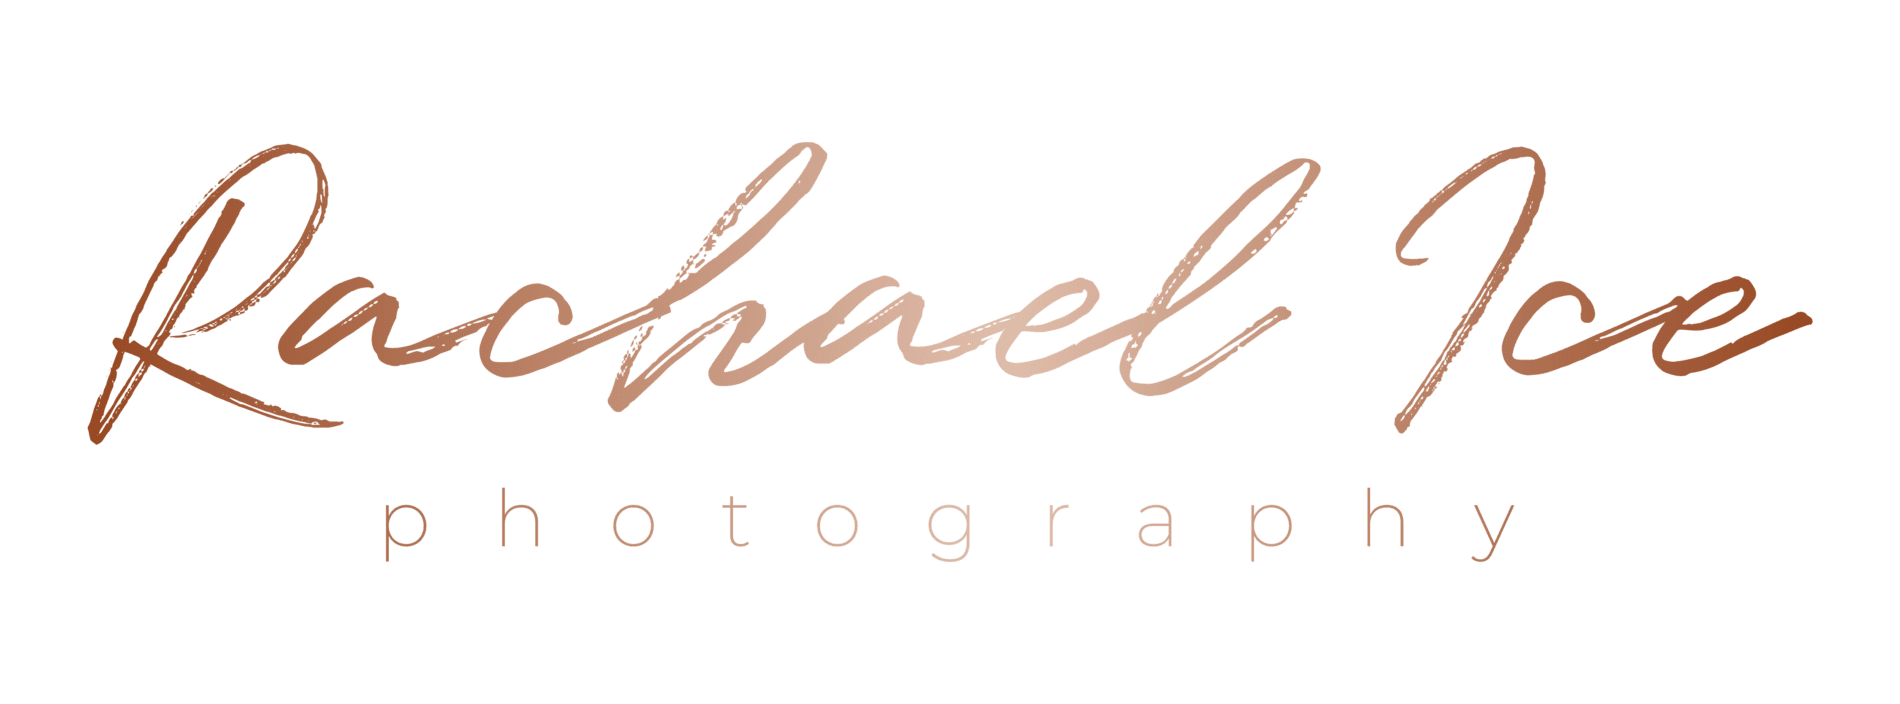 Rachael Ice Photography Logo